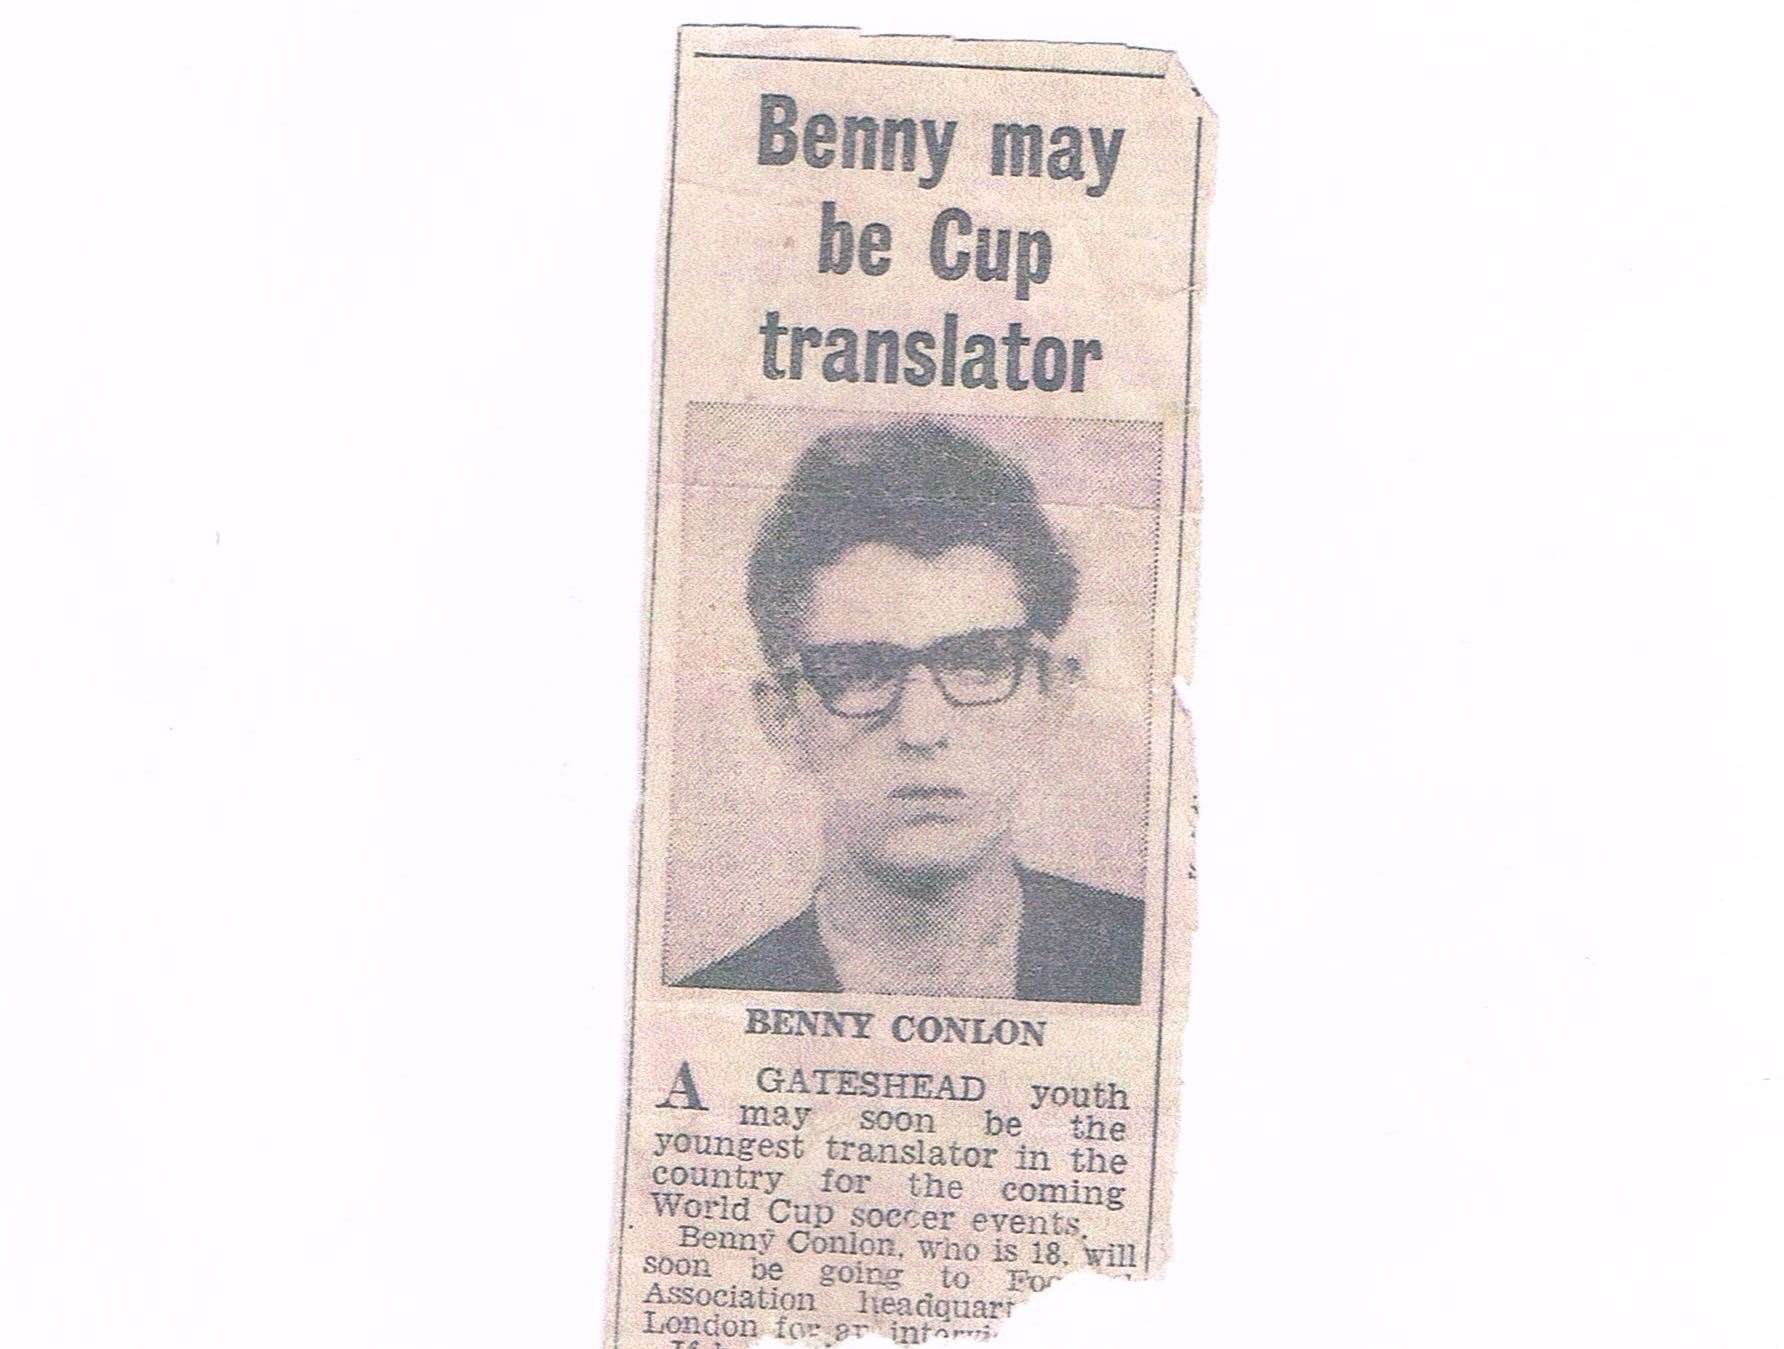 Press coverage of Ben Conlon's selection as a World Cup interpreter in 1966